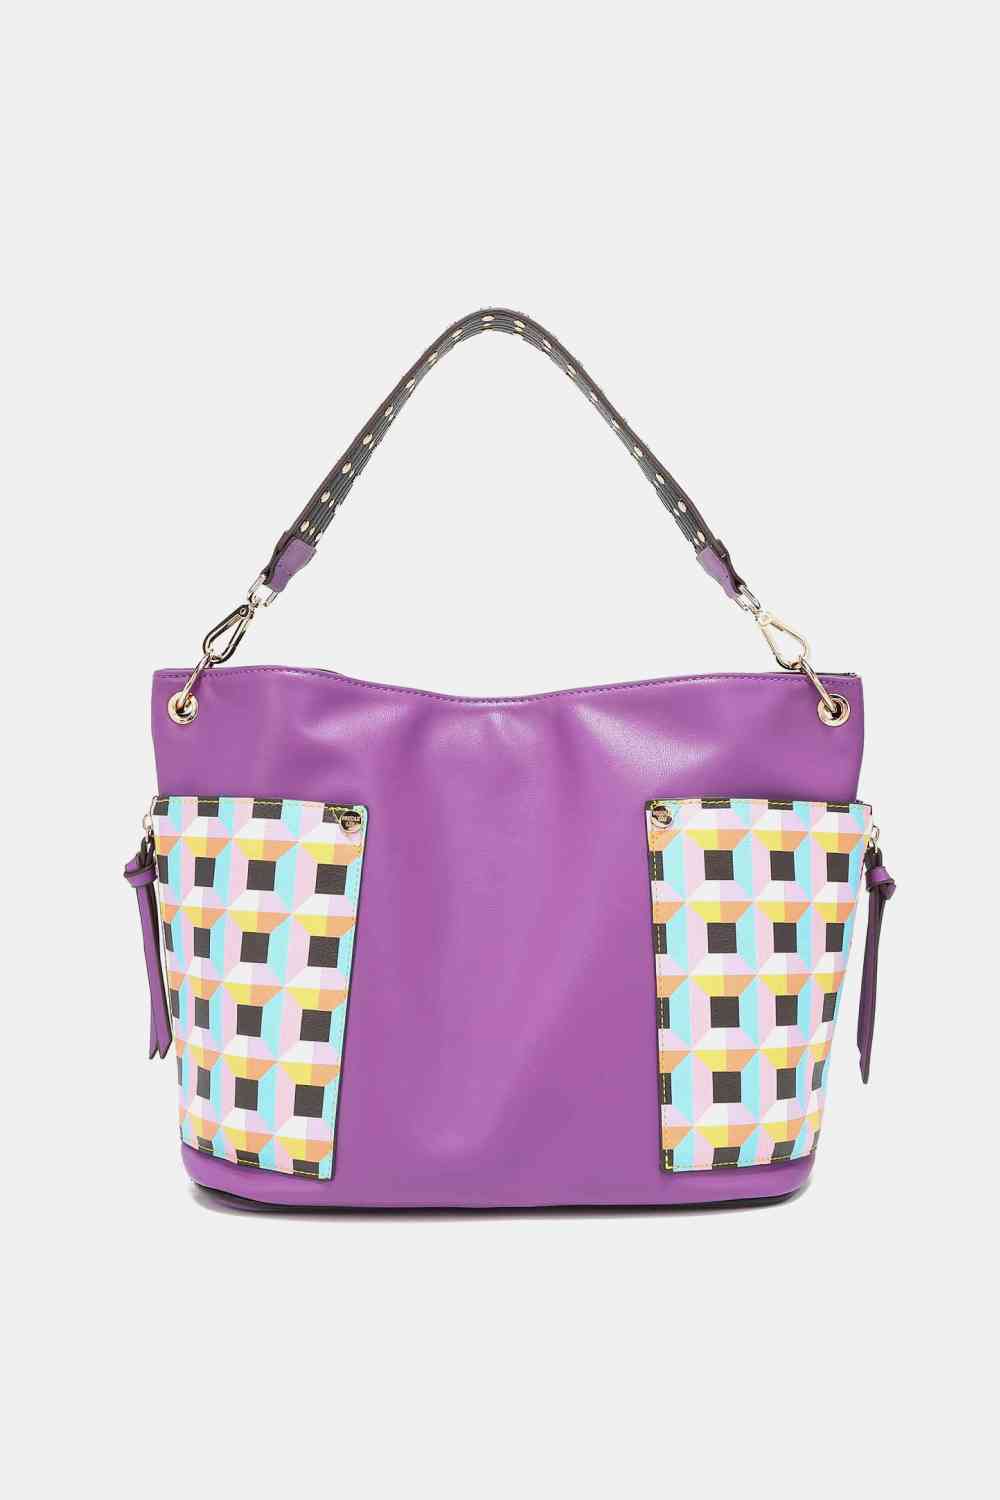 Nicole Lee USA Quihn 3-Piece Handbag Set Purpure No 3